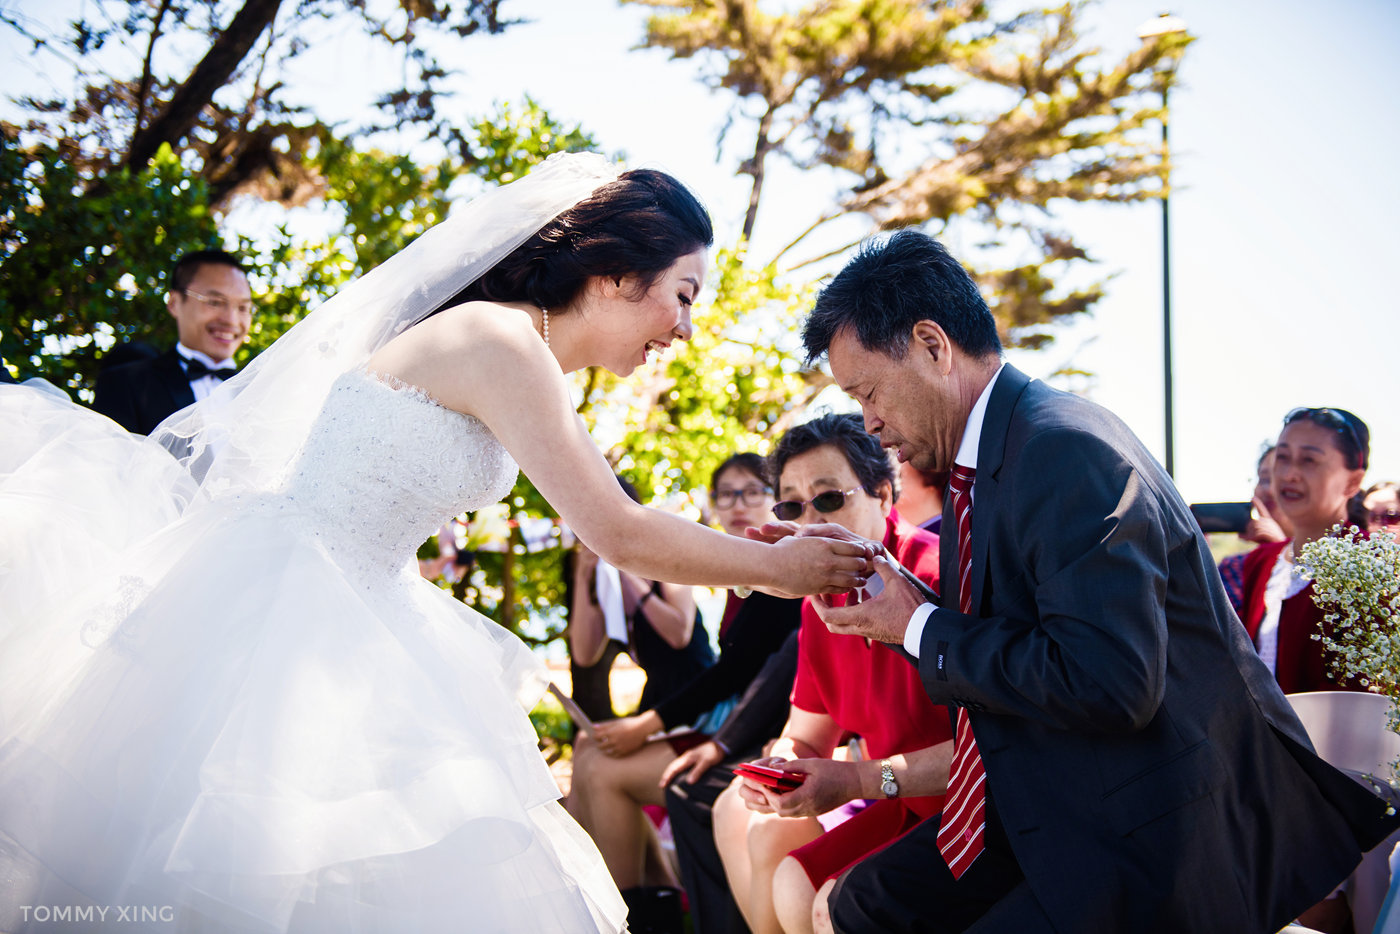 Lovers Point Park Wedding Monterey Wenping & Li  San Francisco Bay Area 旧金山湾区 洛杉矶婚礼婚纱照摄影师 Tommy Xing Photography 079.jpg